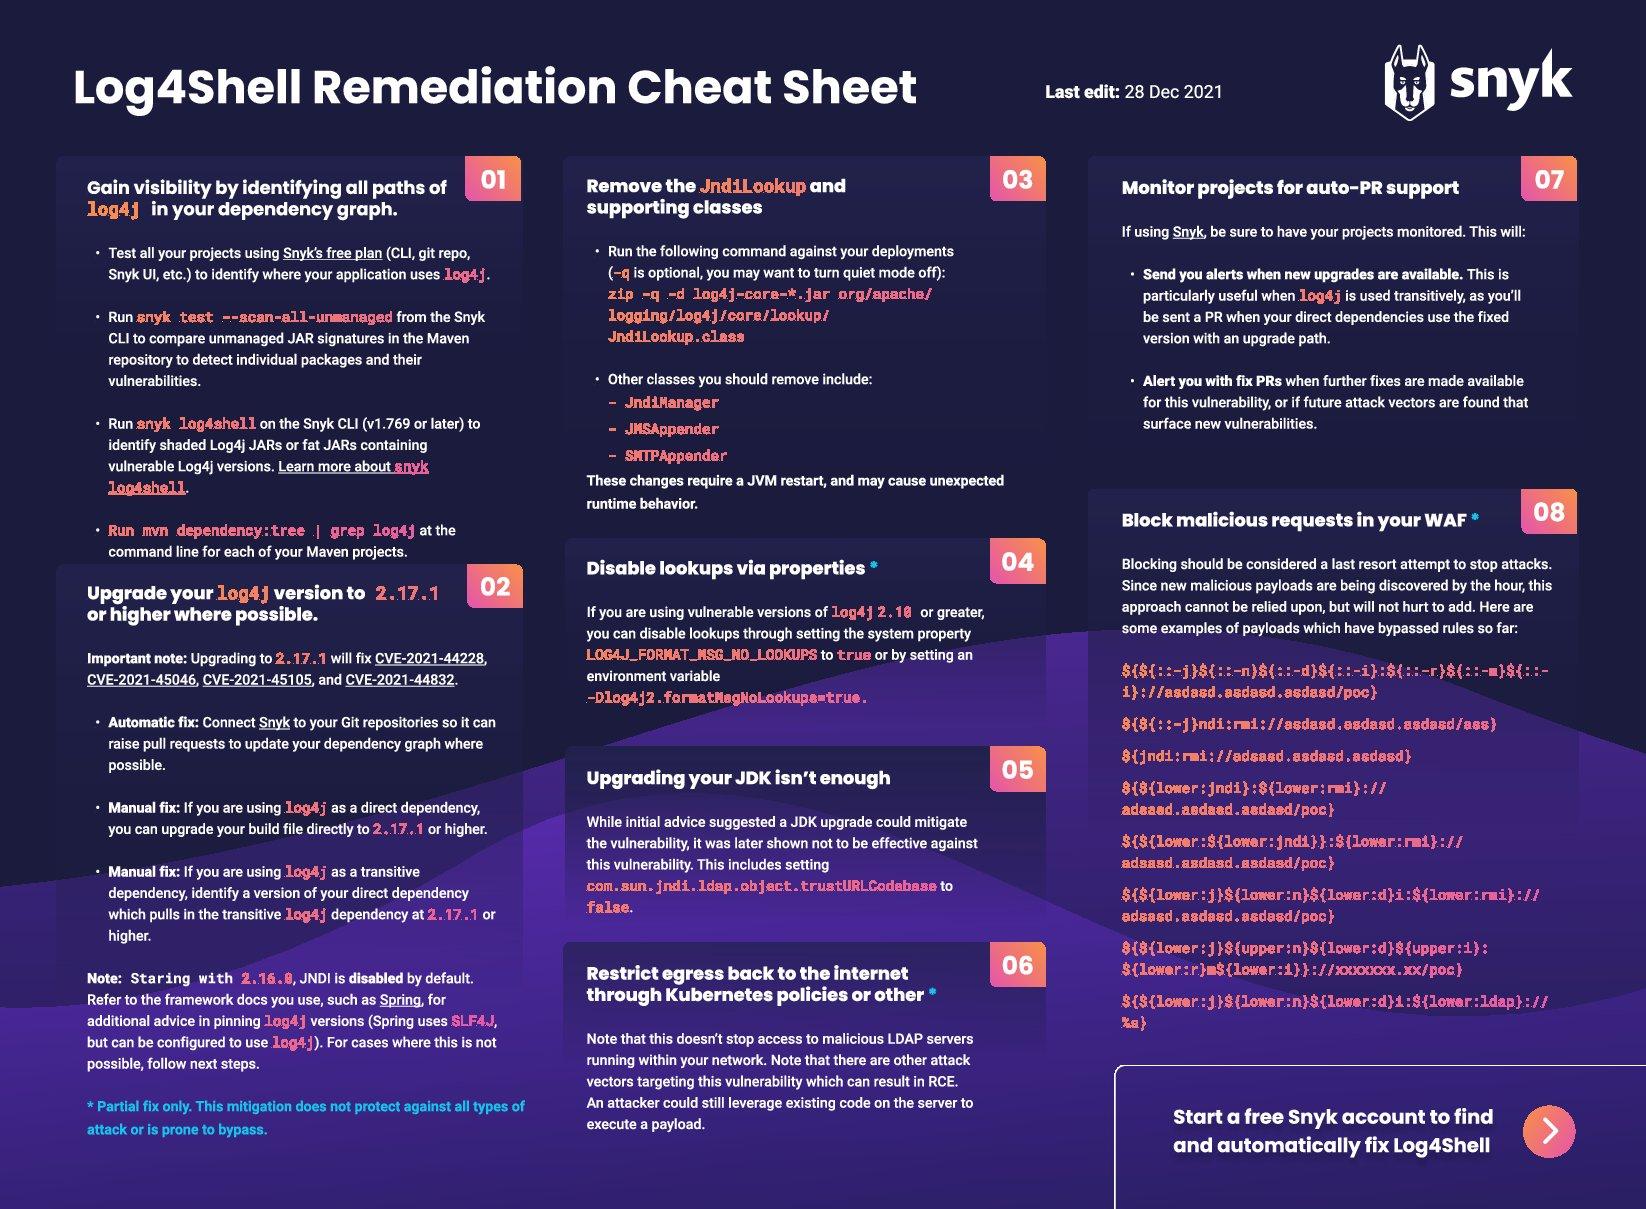 wordpress-sync/cheat-sheet-log4shell-remediation-pdf